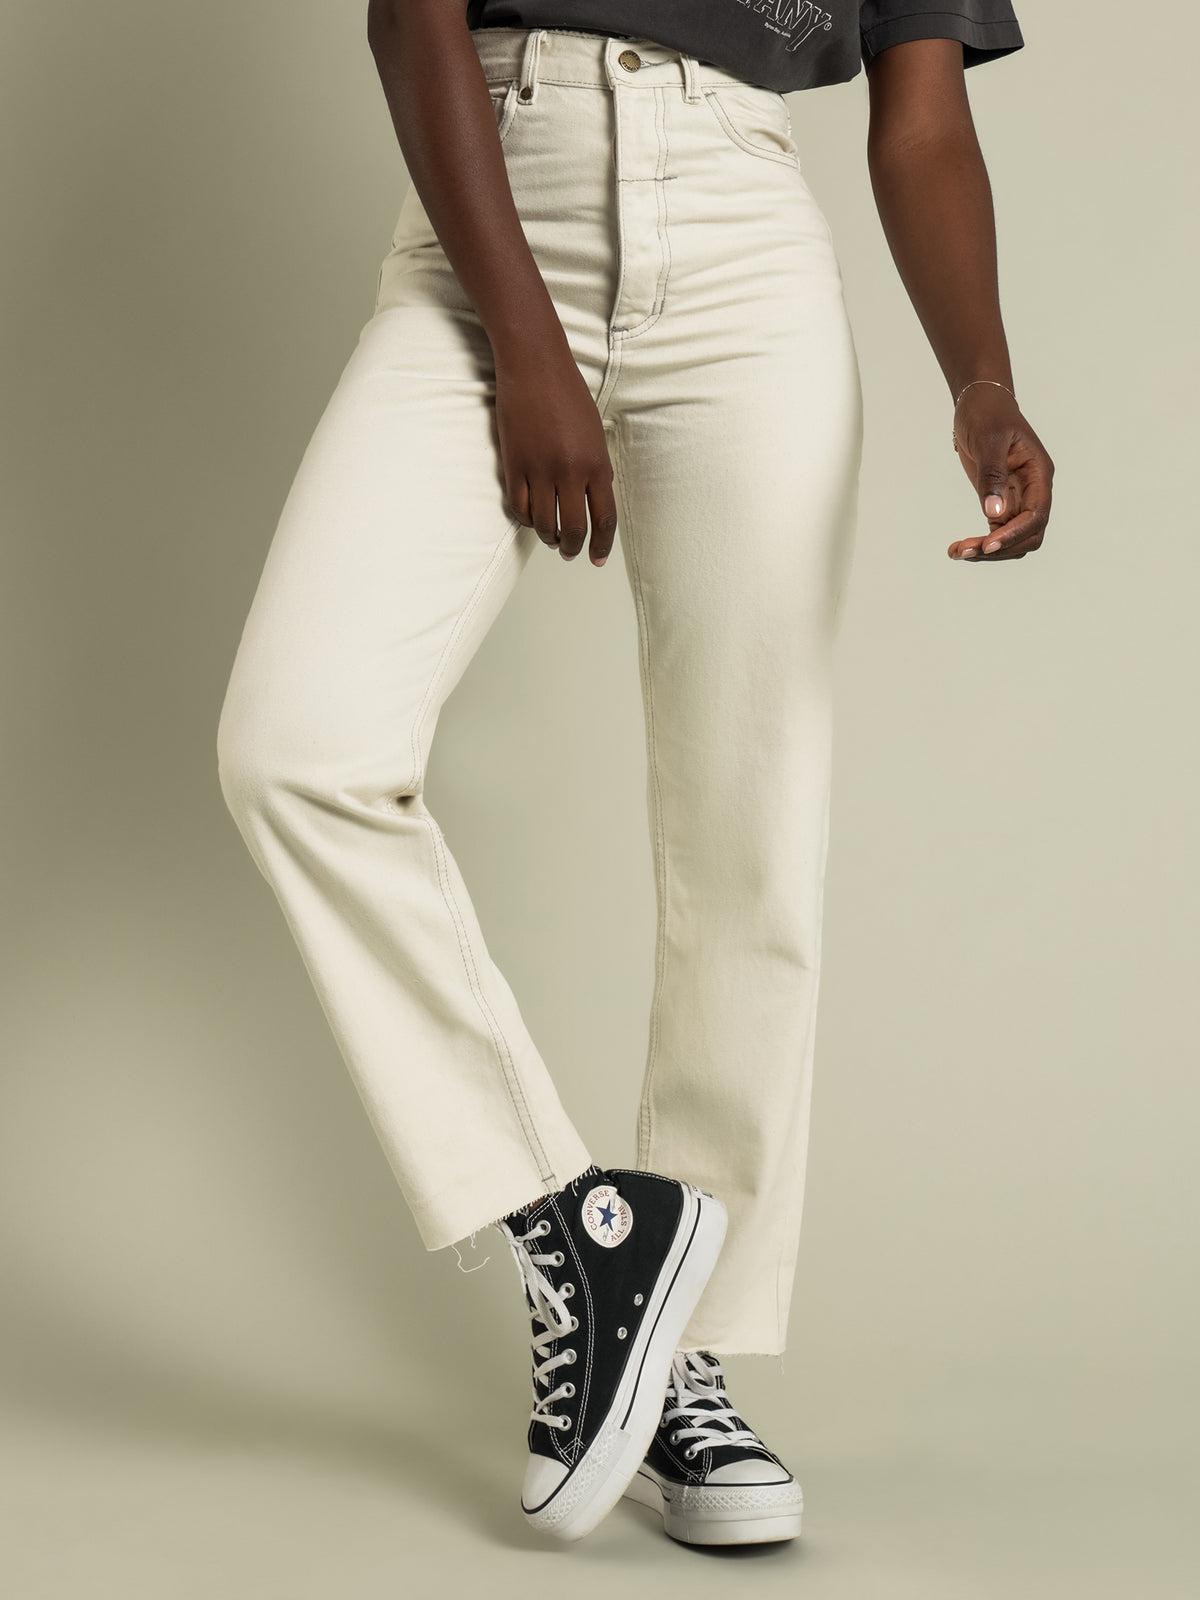 Paige Jeans in Vintage Bone White